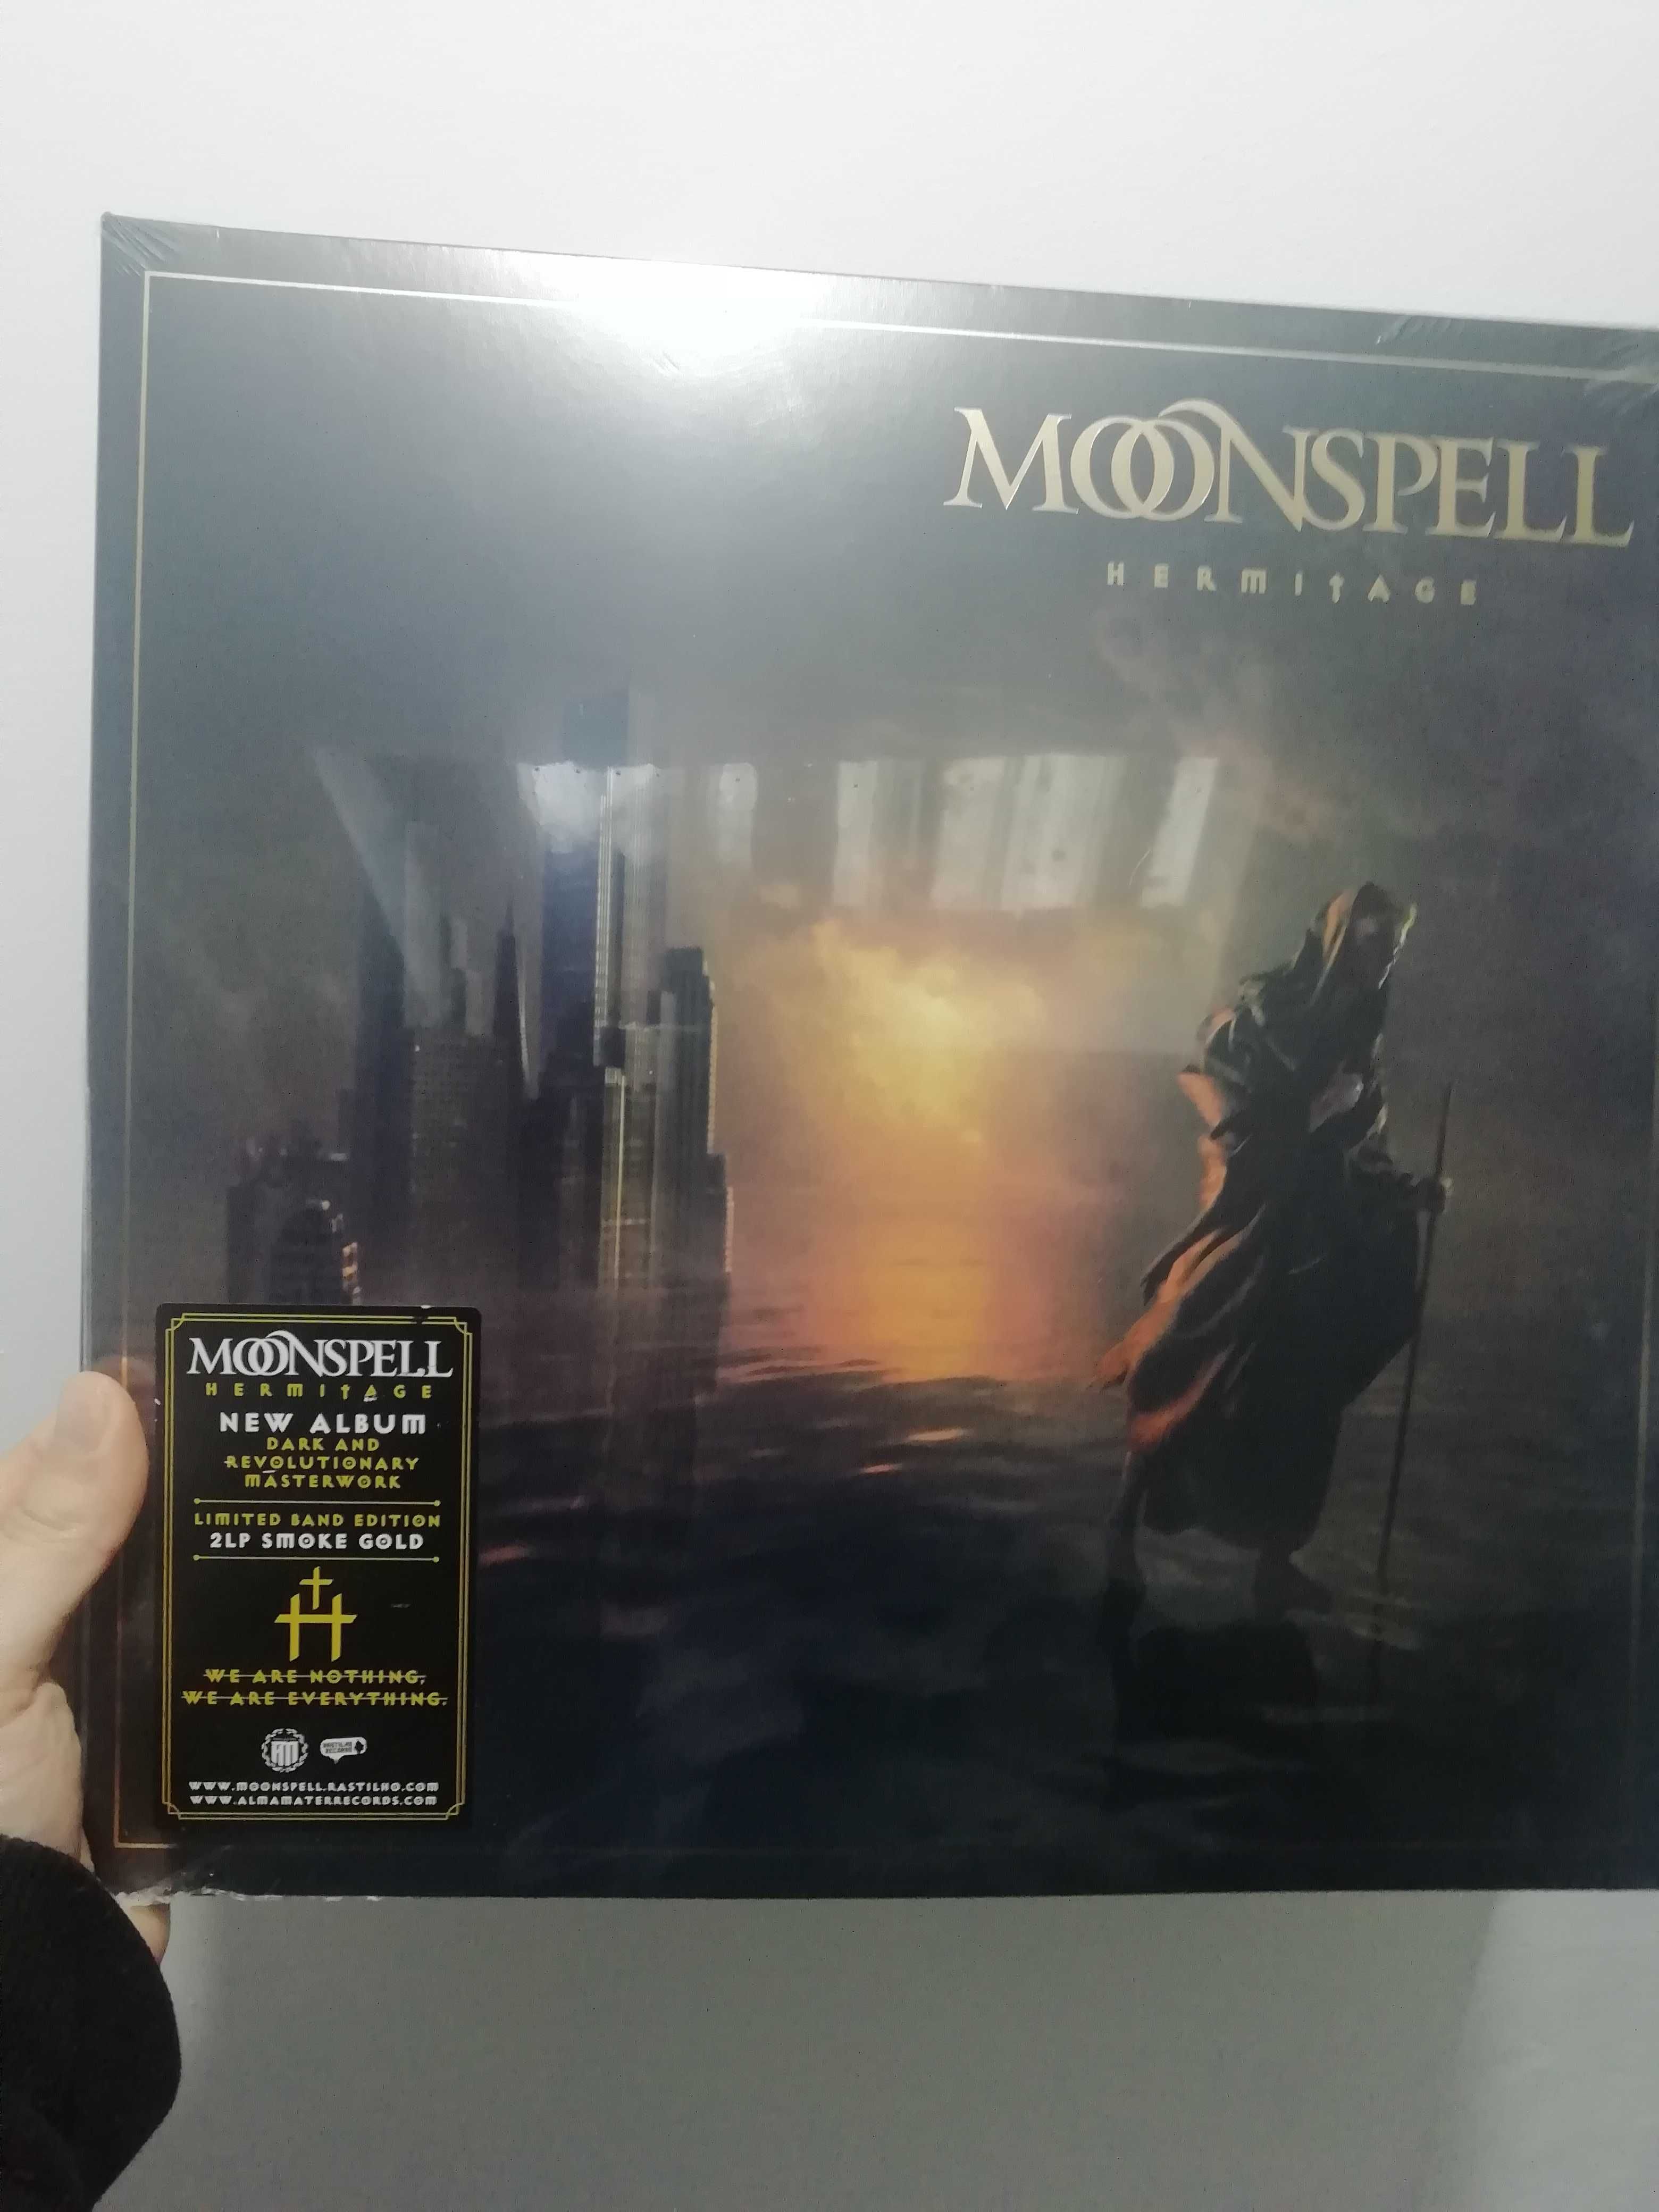 Moonspell - Hermitage vinil edição limitada (novo, selado)